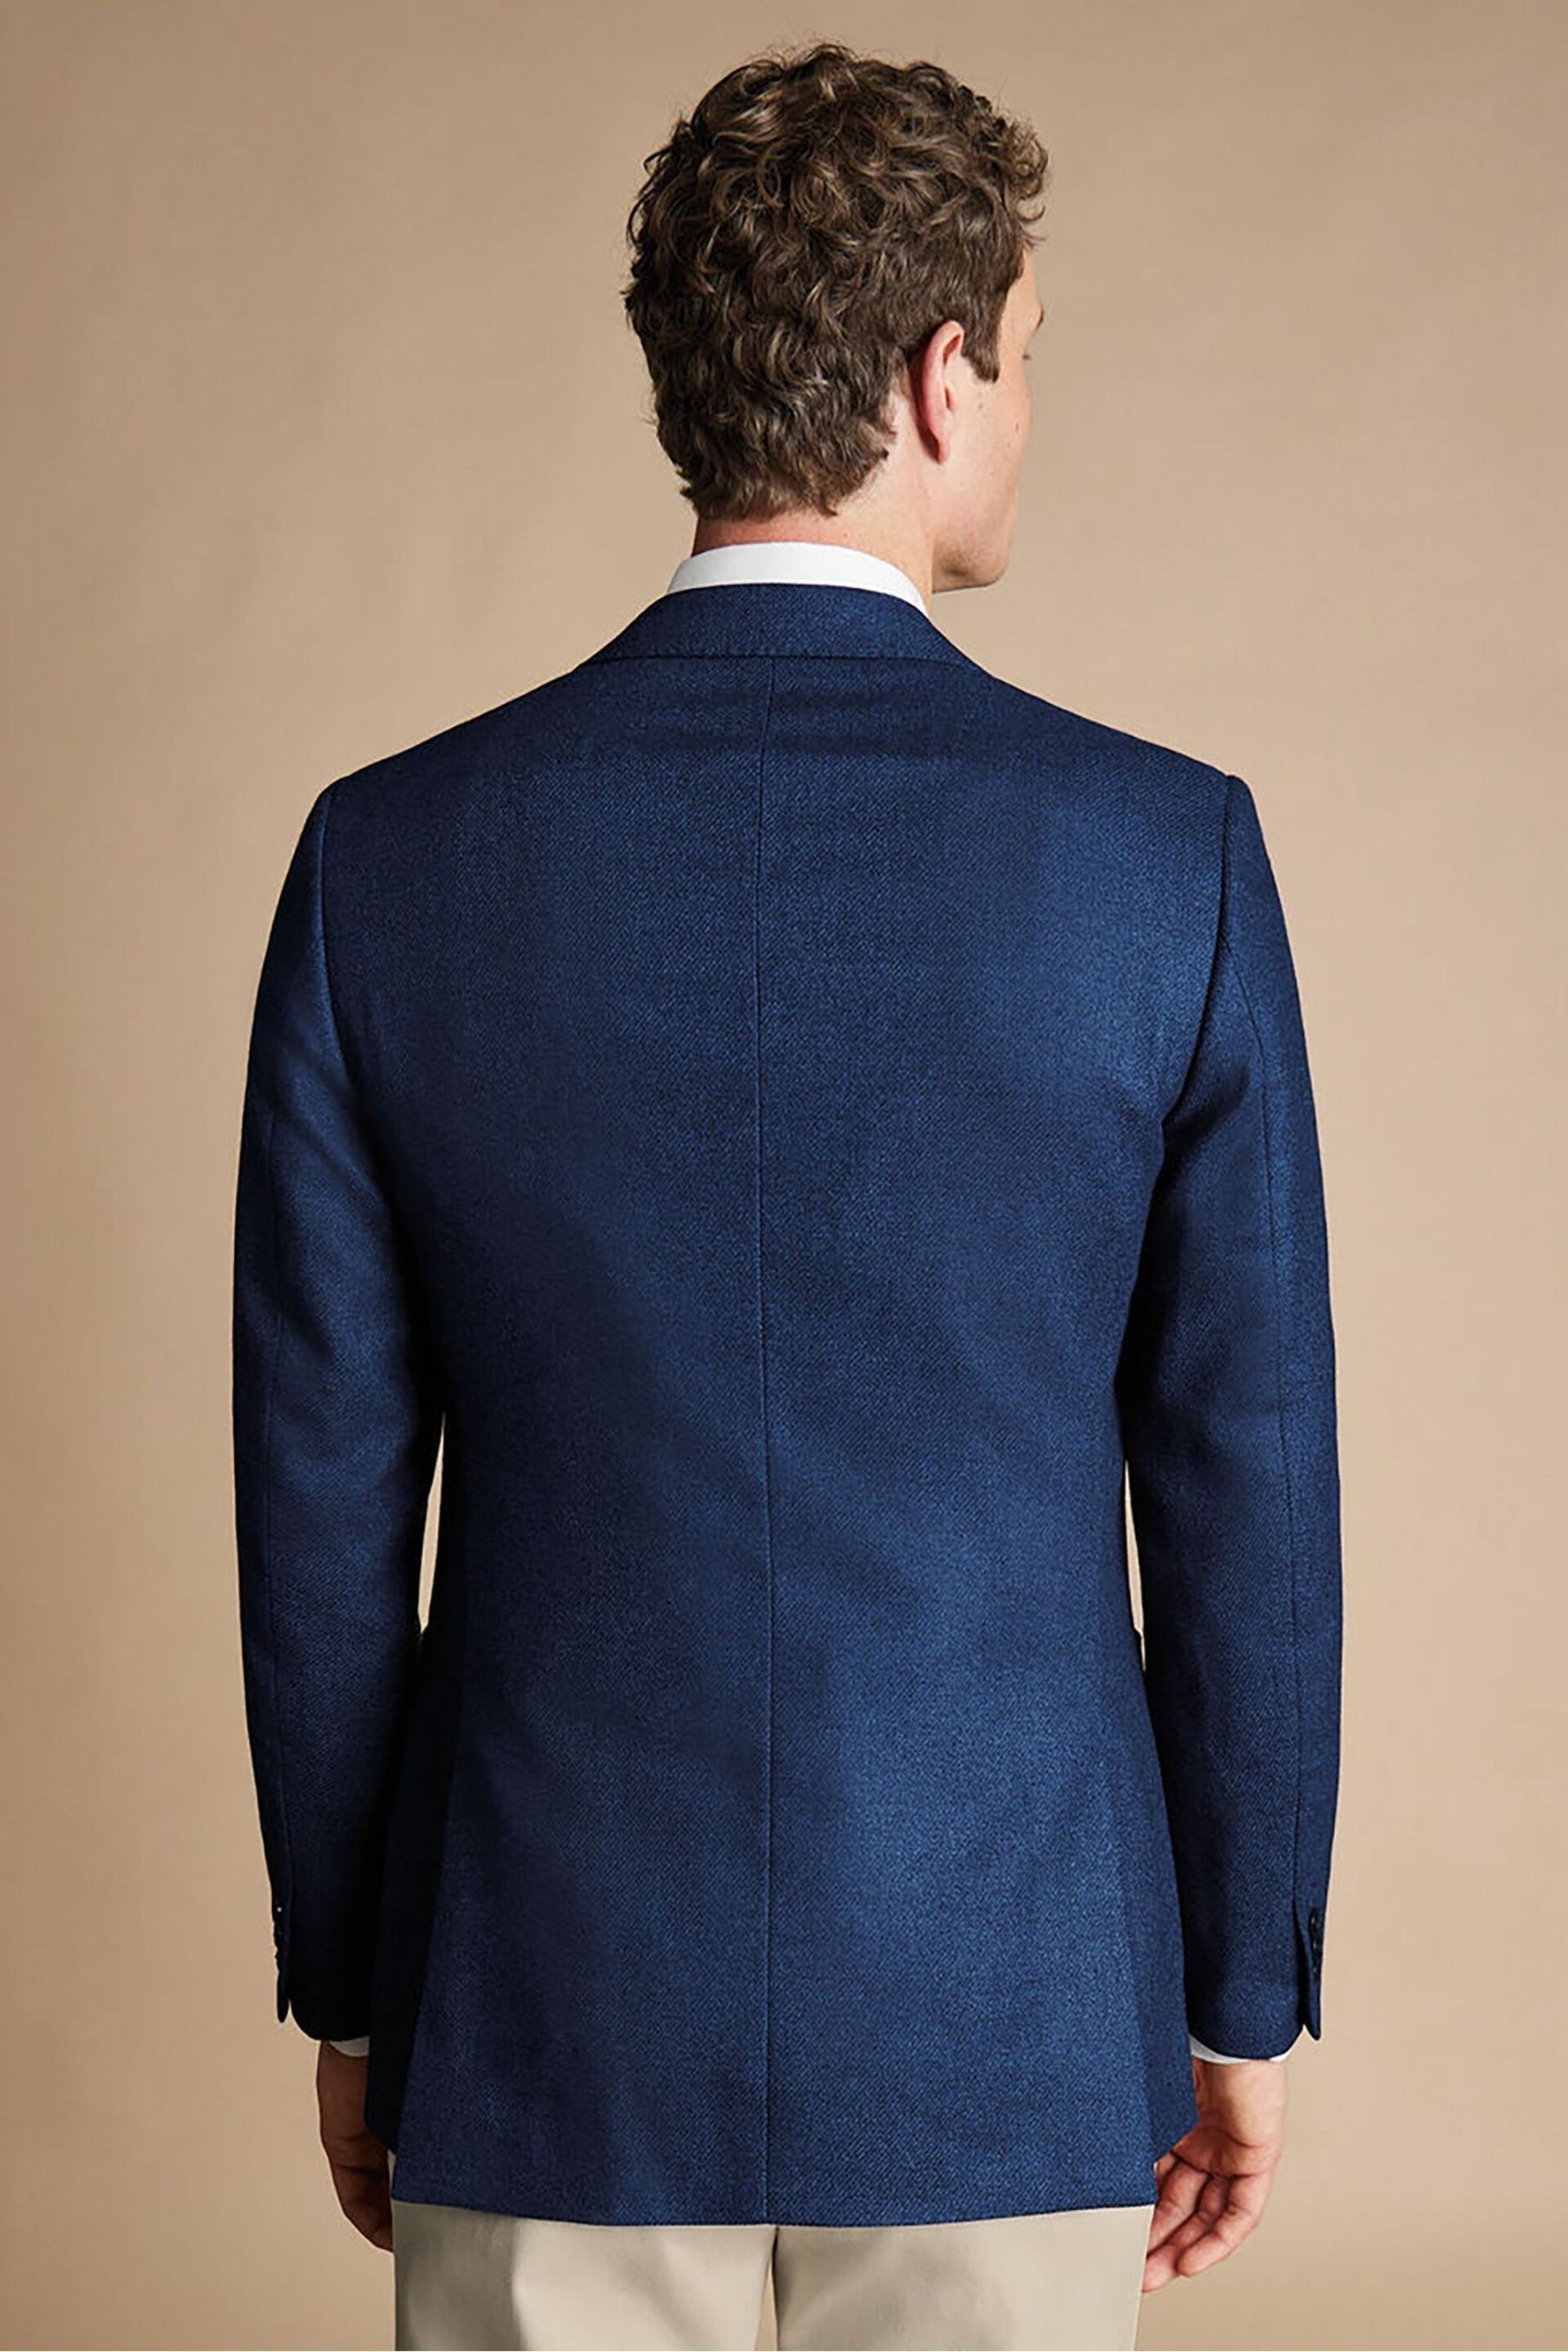 Charles Tyrwhitt Blue Twill Wool Silk Classic Fit Jacket - Image 2 of 5